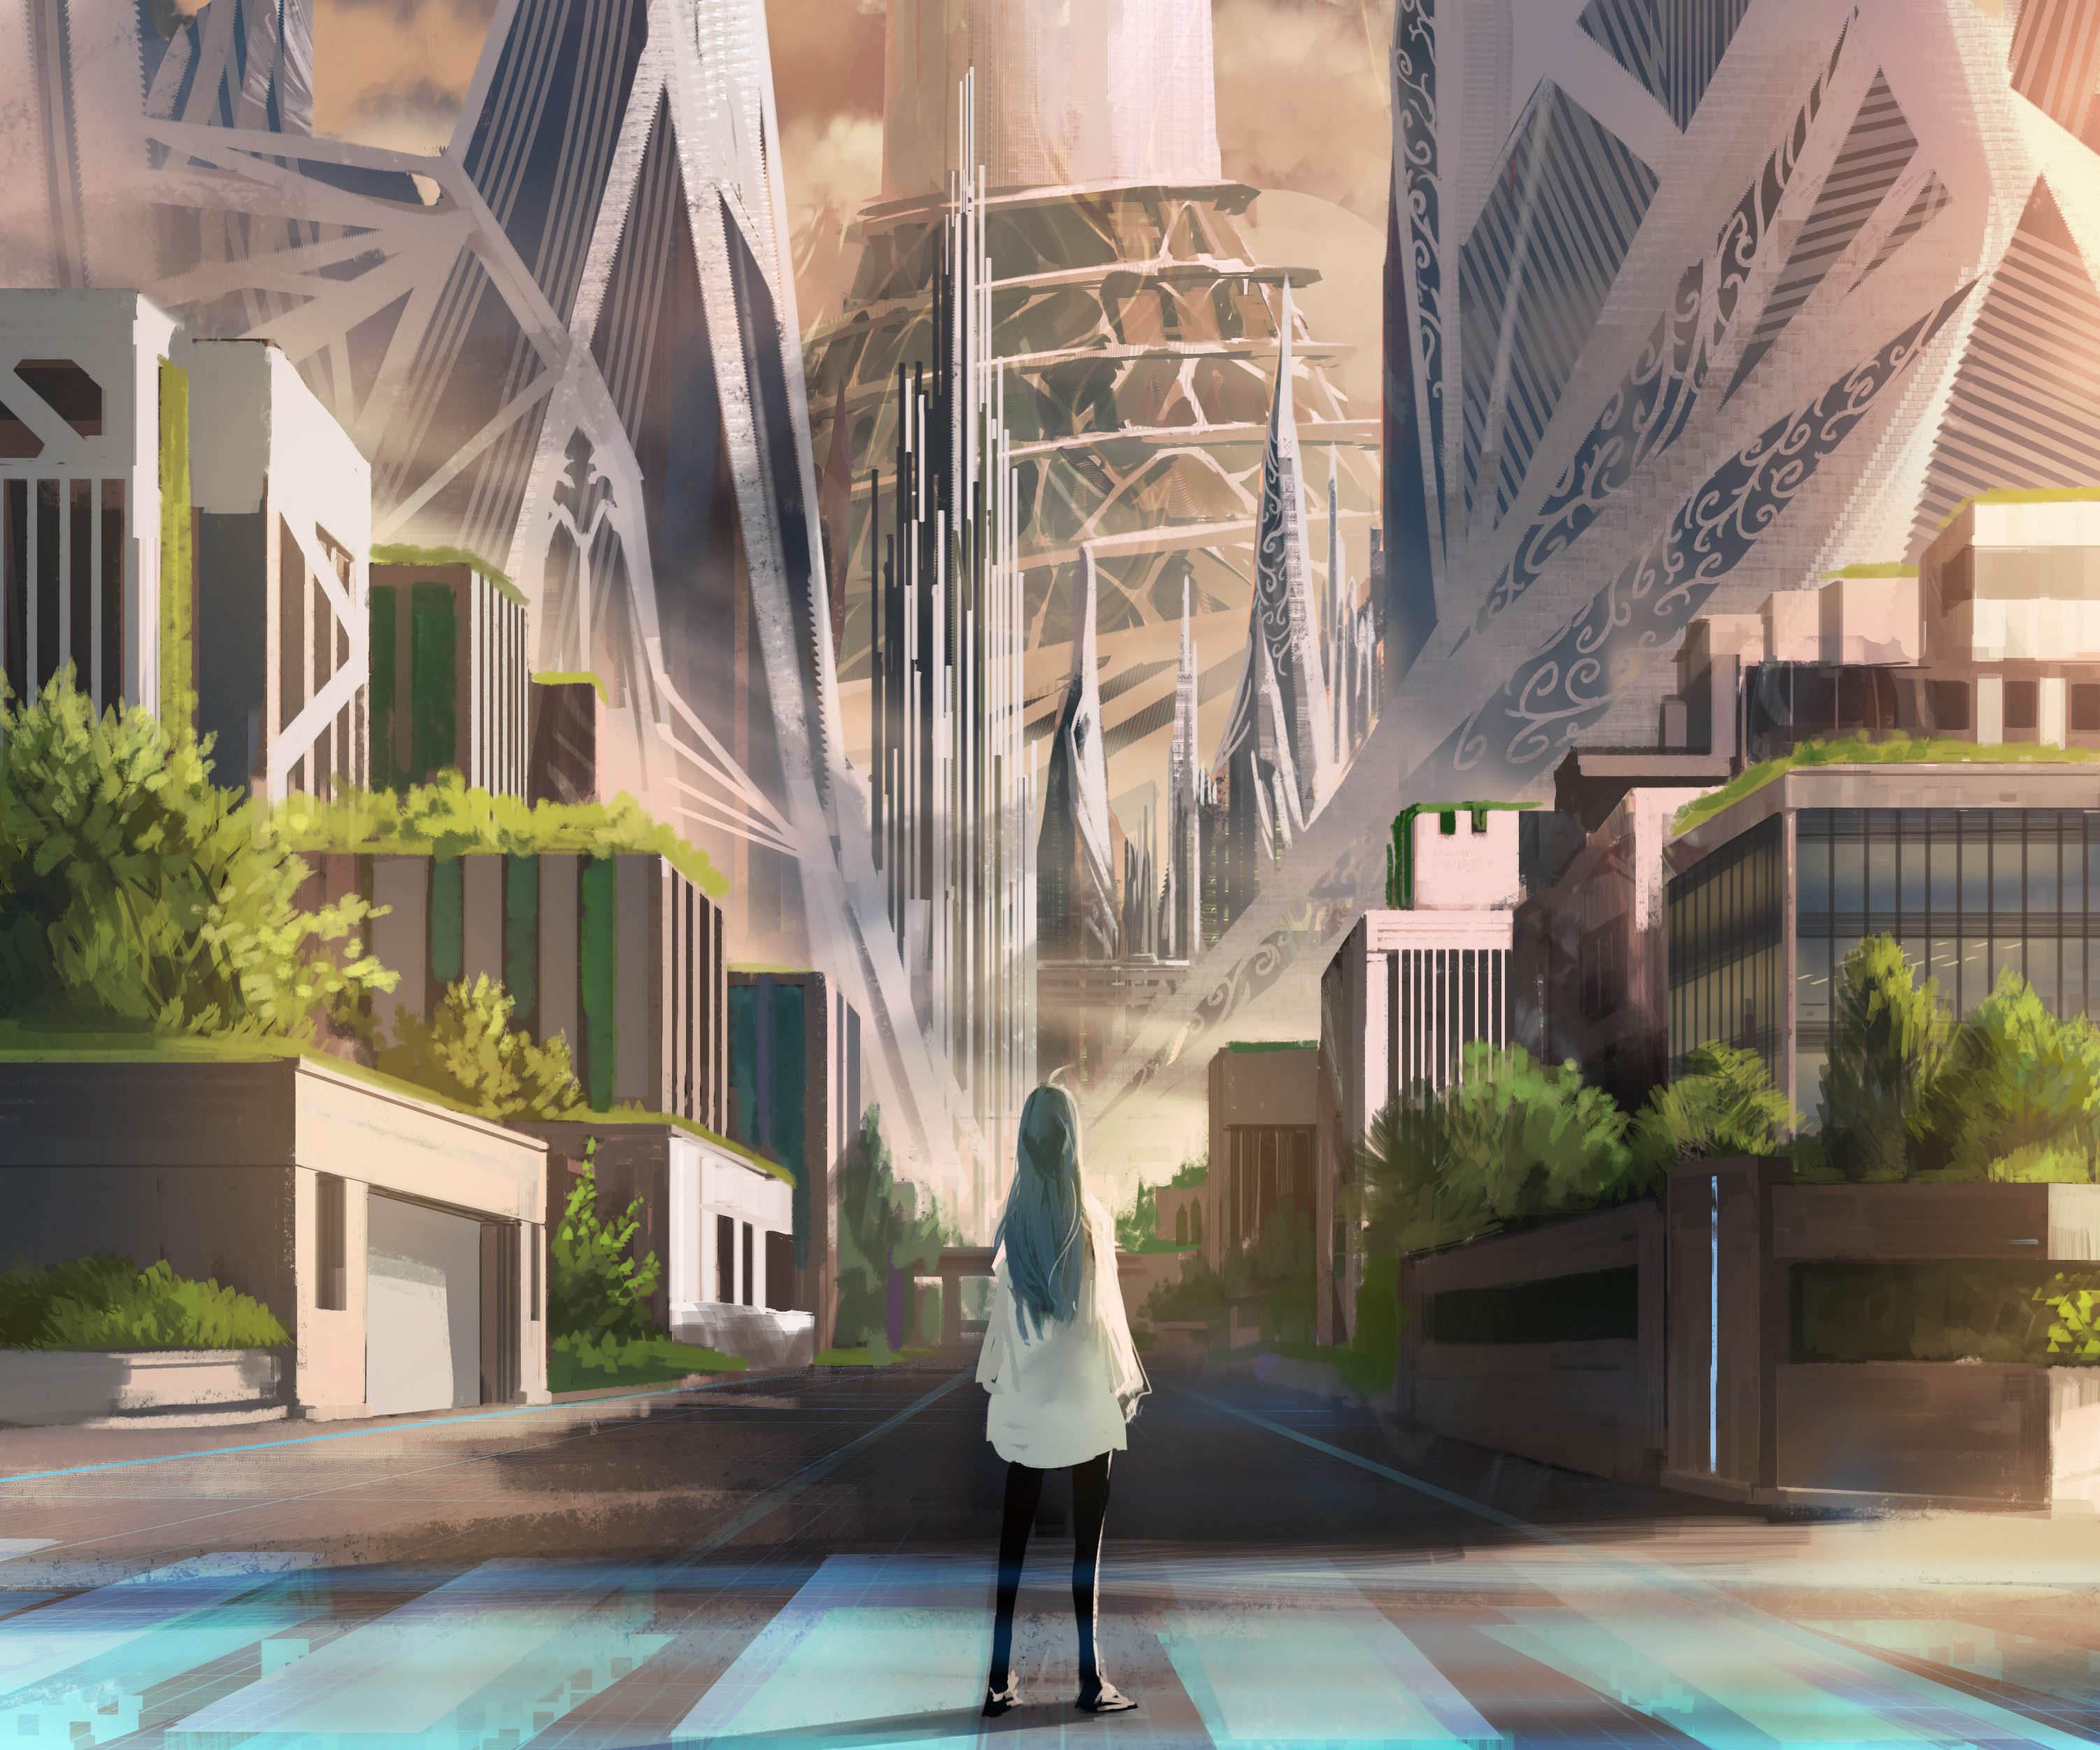 Anime Vivy: Fluorite Eye's Song HD Wallpaper | Background Image